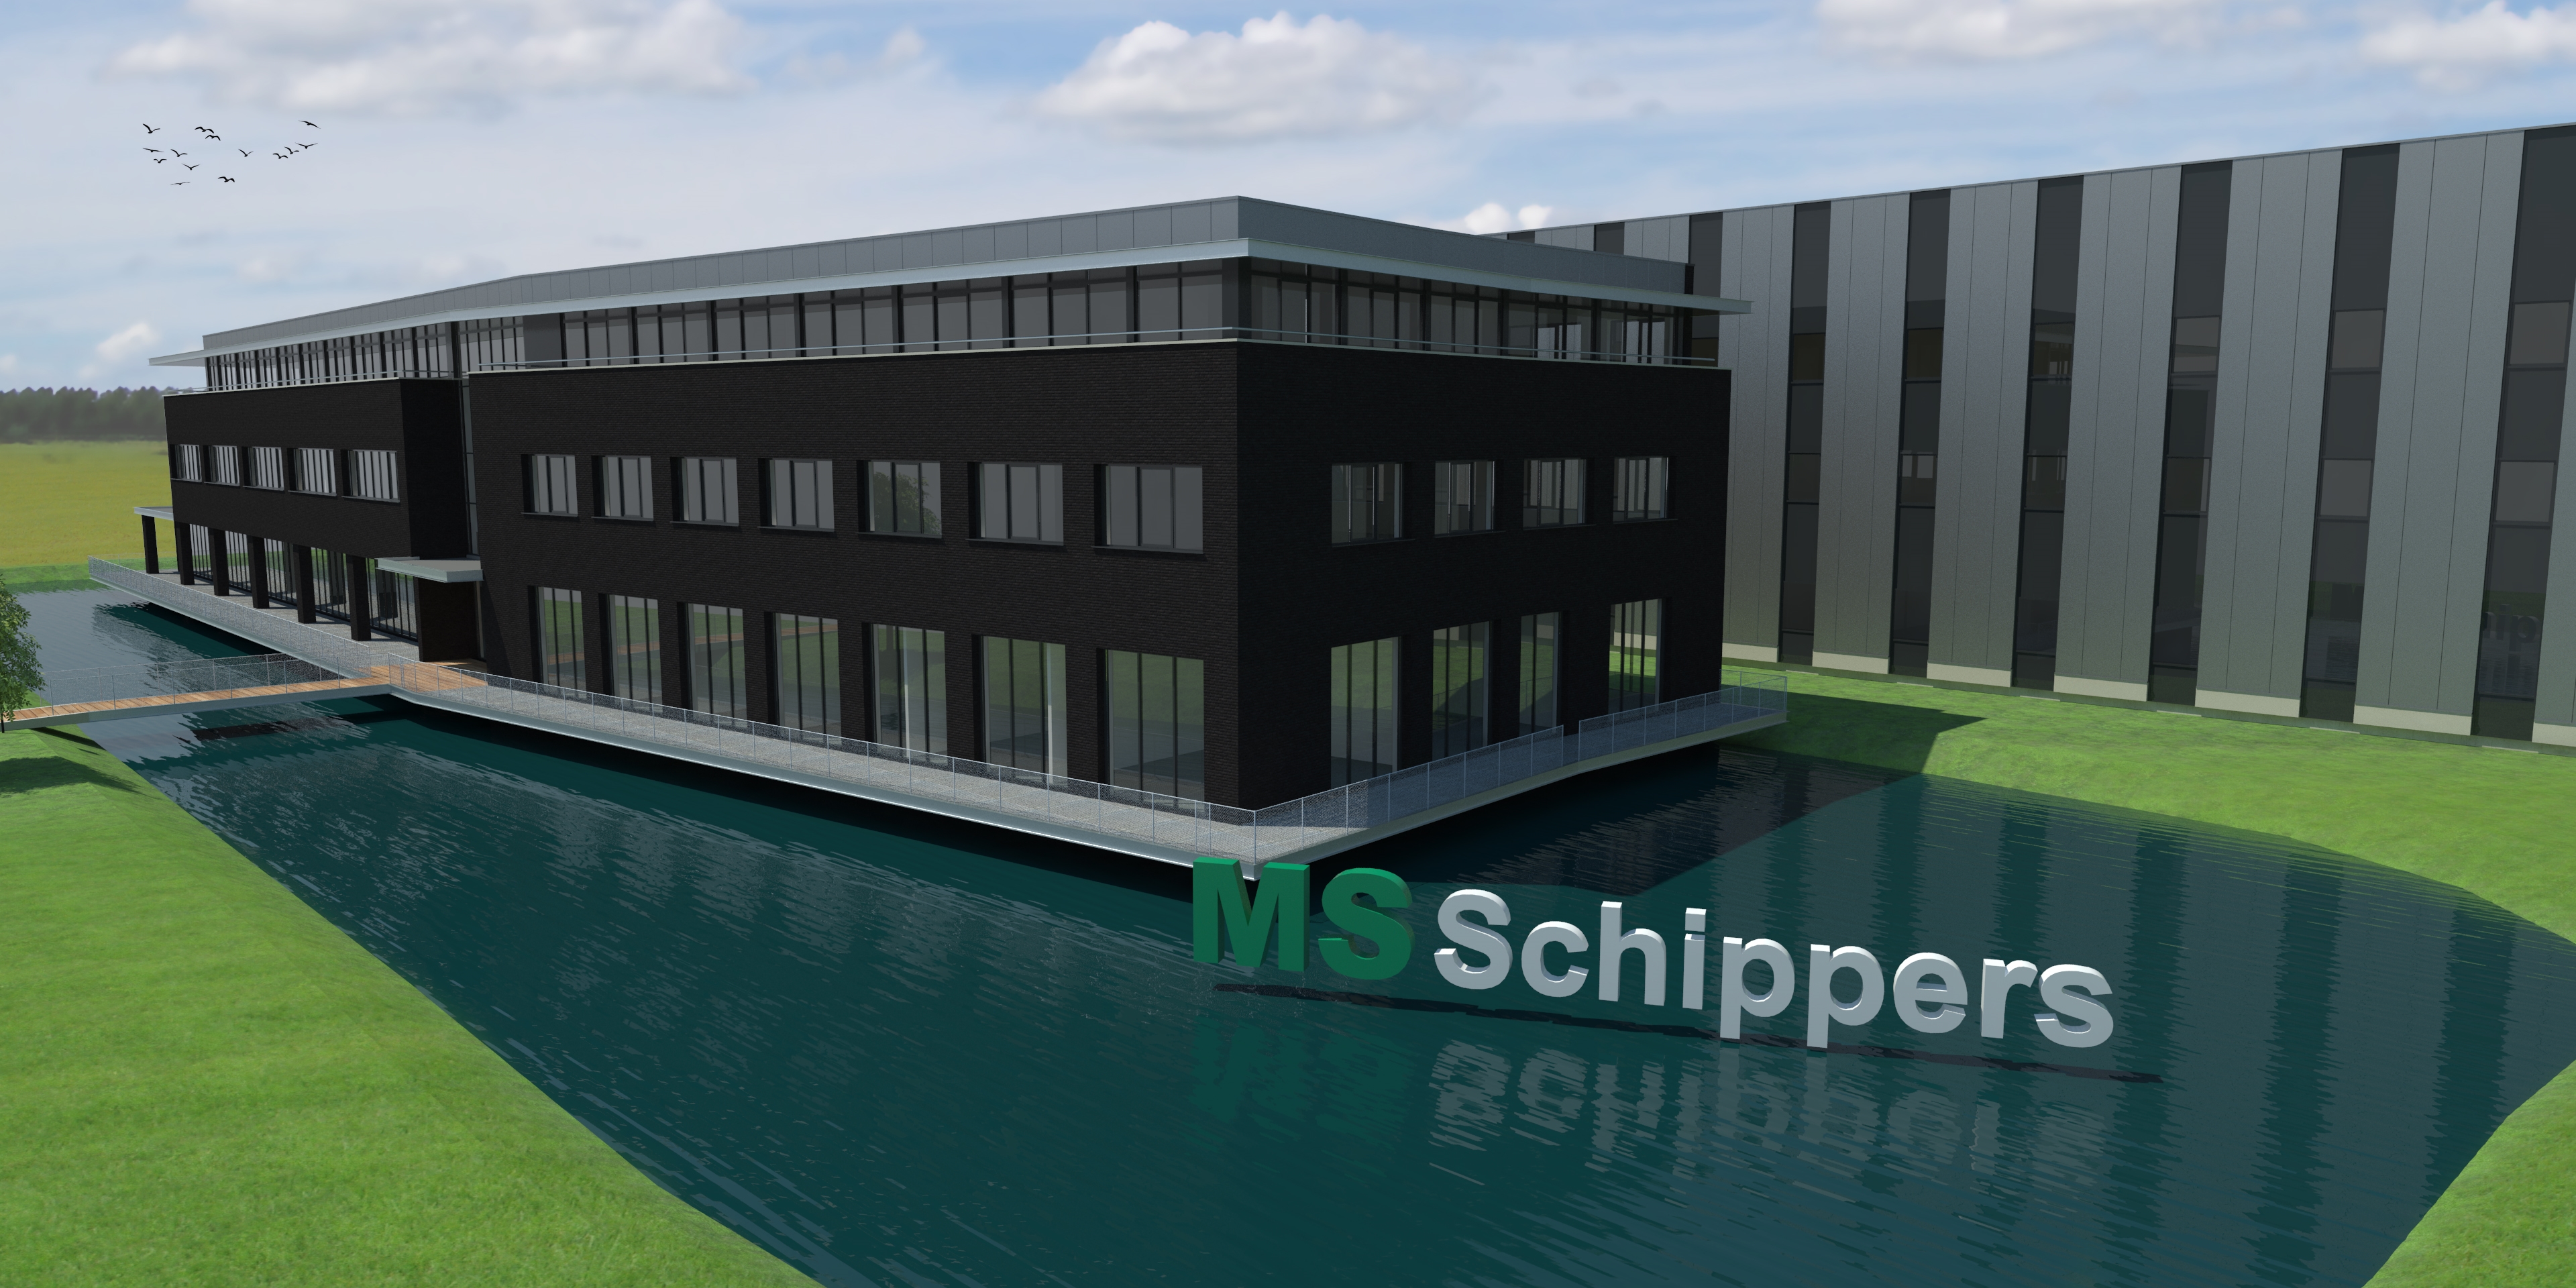 Impressie Nieuwbouw Schippers Hq (05 02 2020)